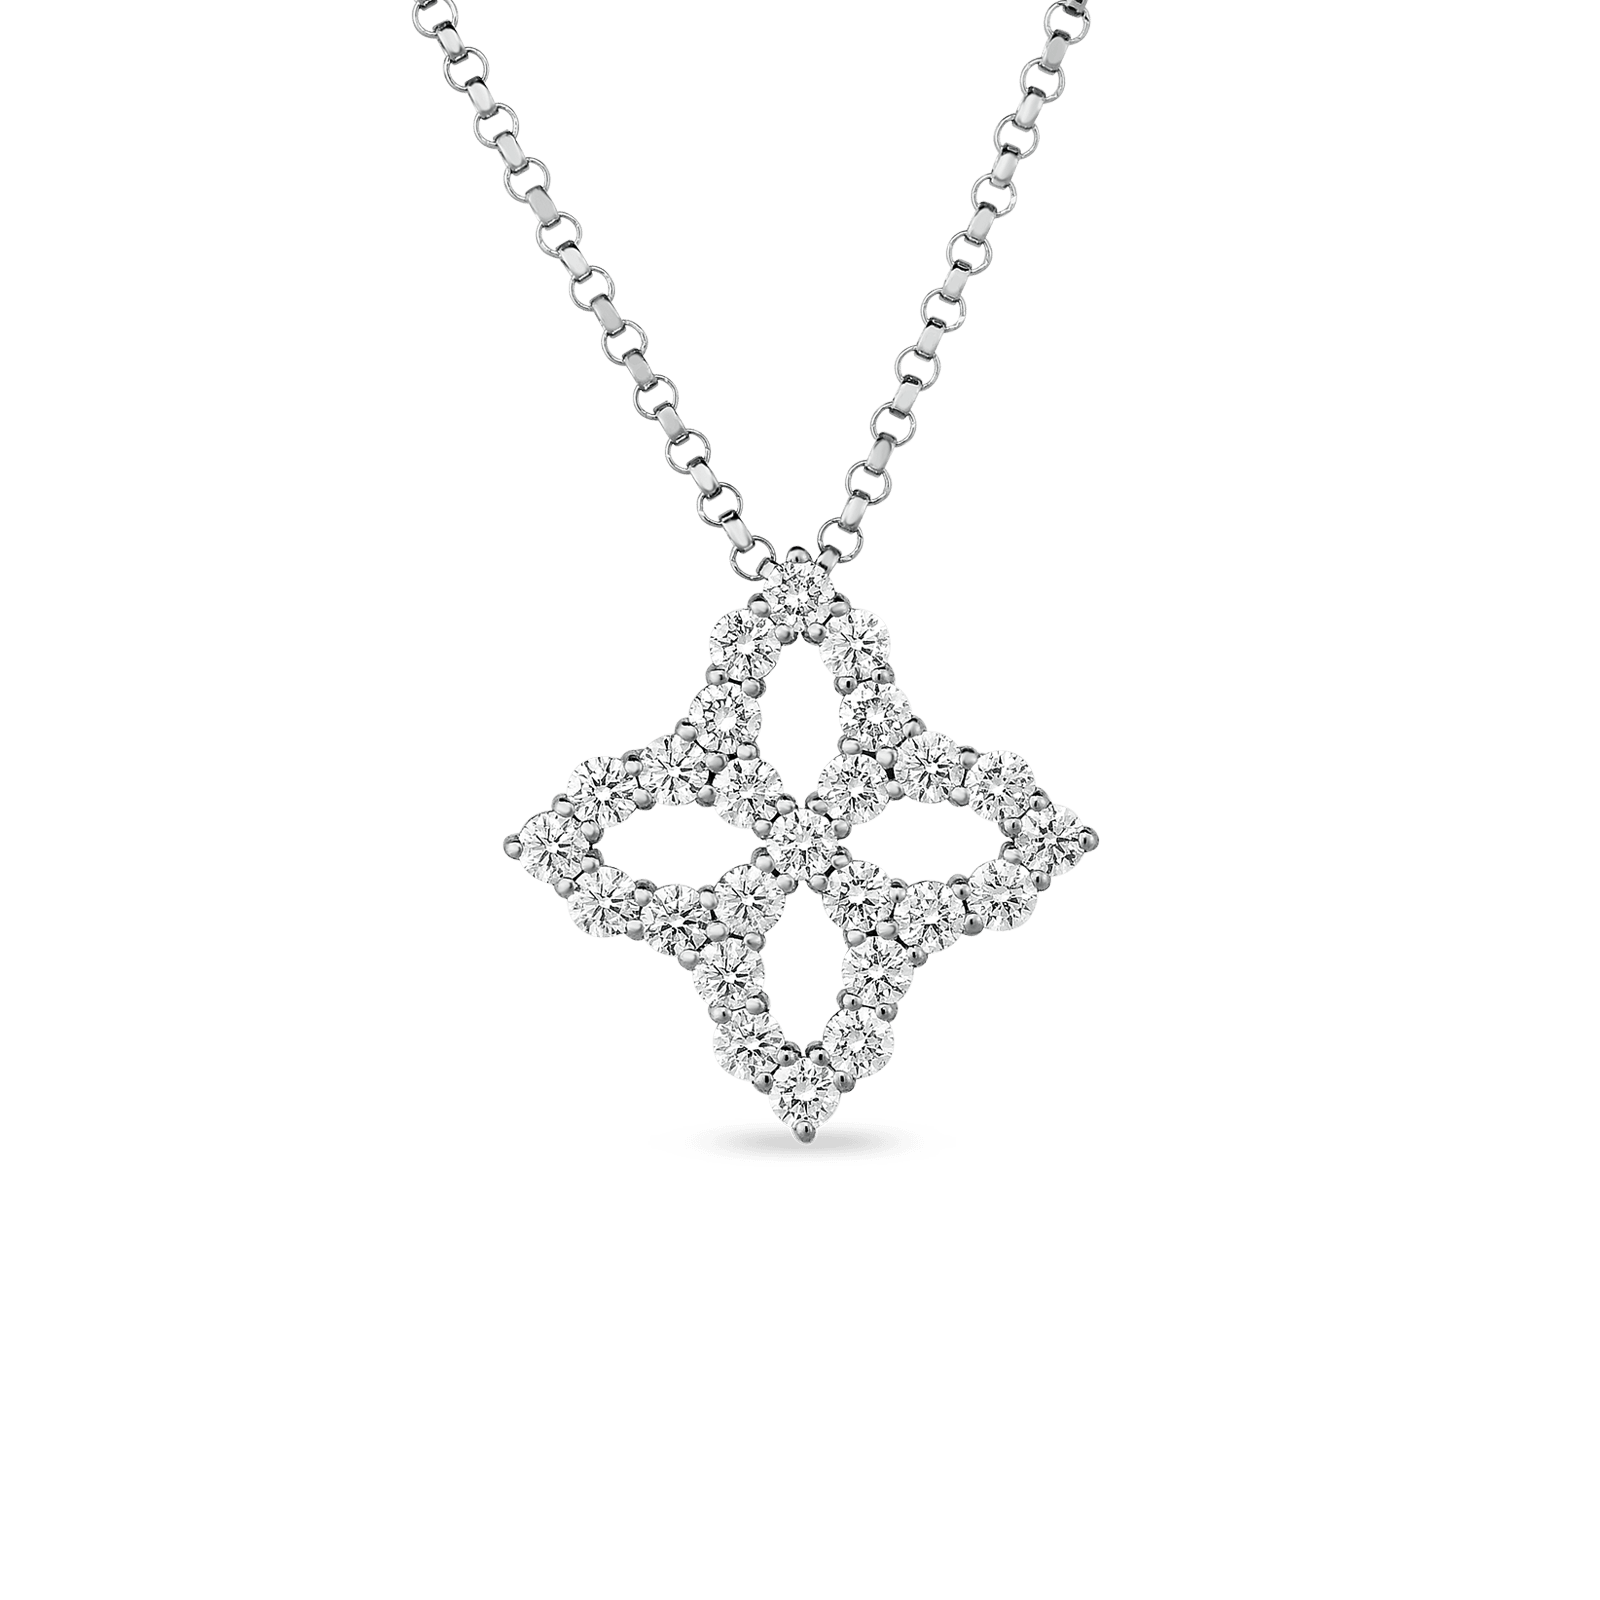 White Gold Necklace with Medium Diamond Pendant